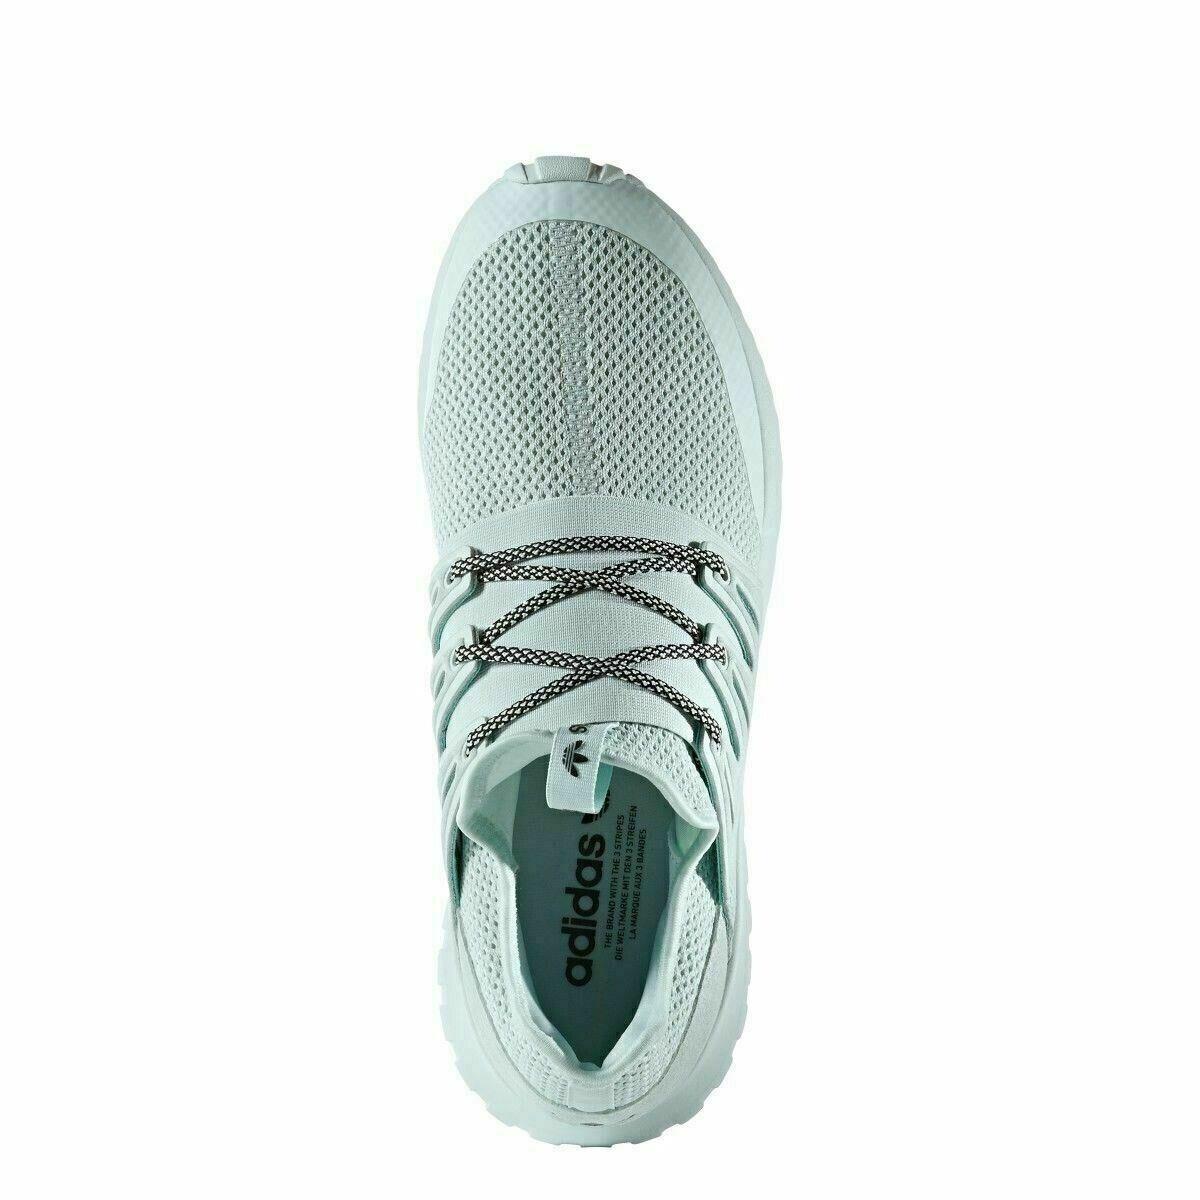 Adidas shoes Originals Tubular Radial - Ice Mint 3